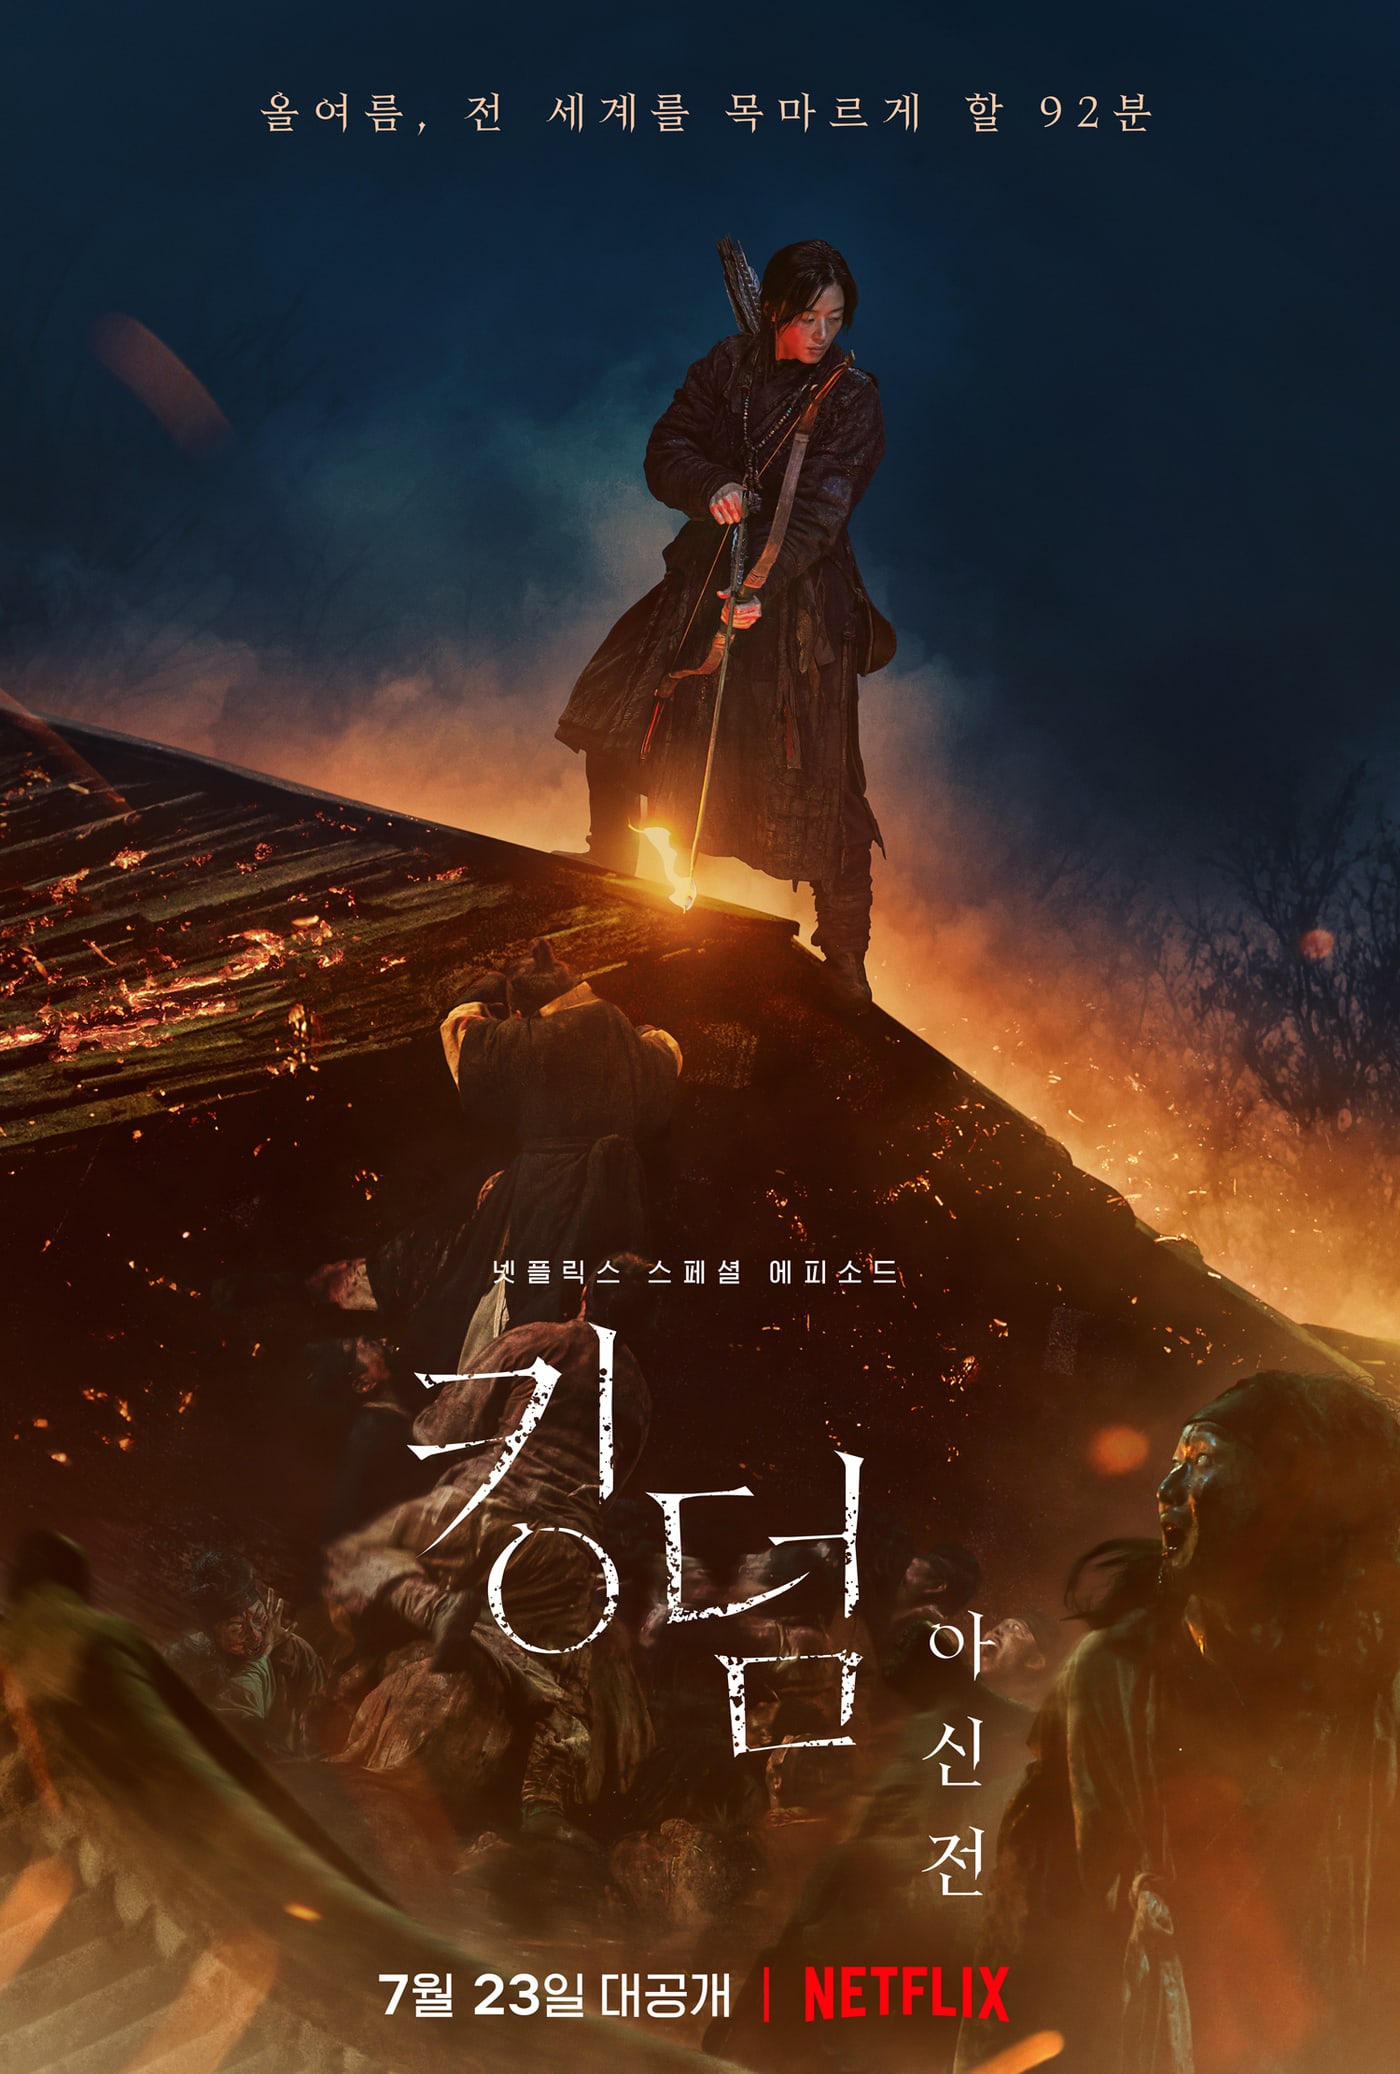 jun-ji-hyun-sets-zombies-on-fire-in-‘kingdom:-ashin-of-the-north’-second-main-poster